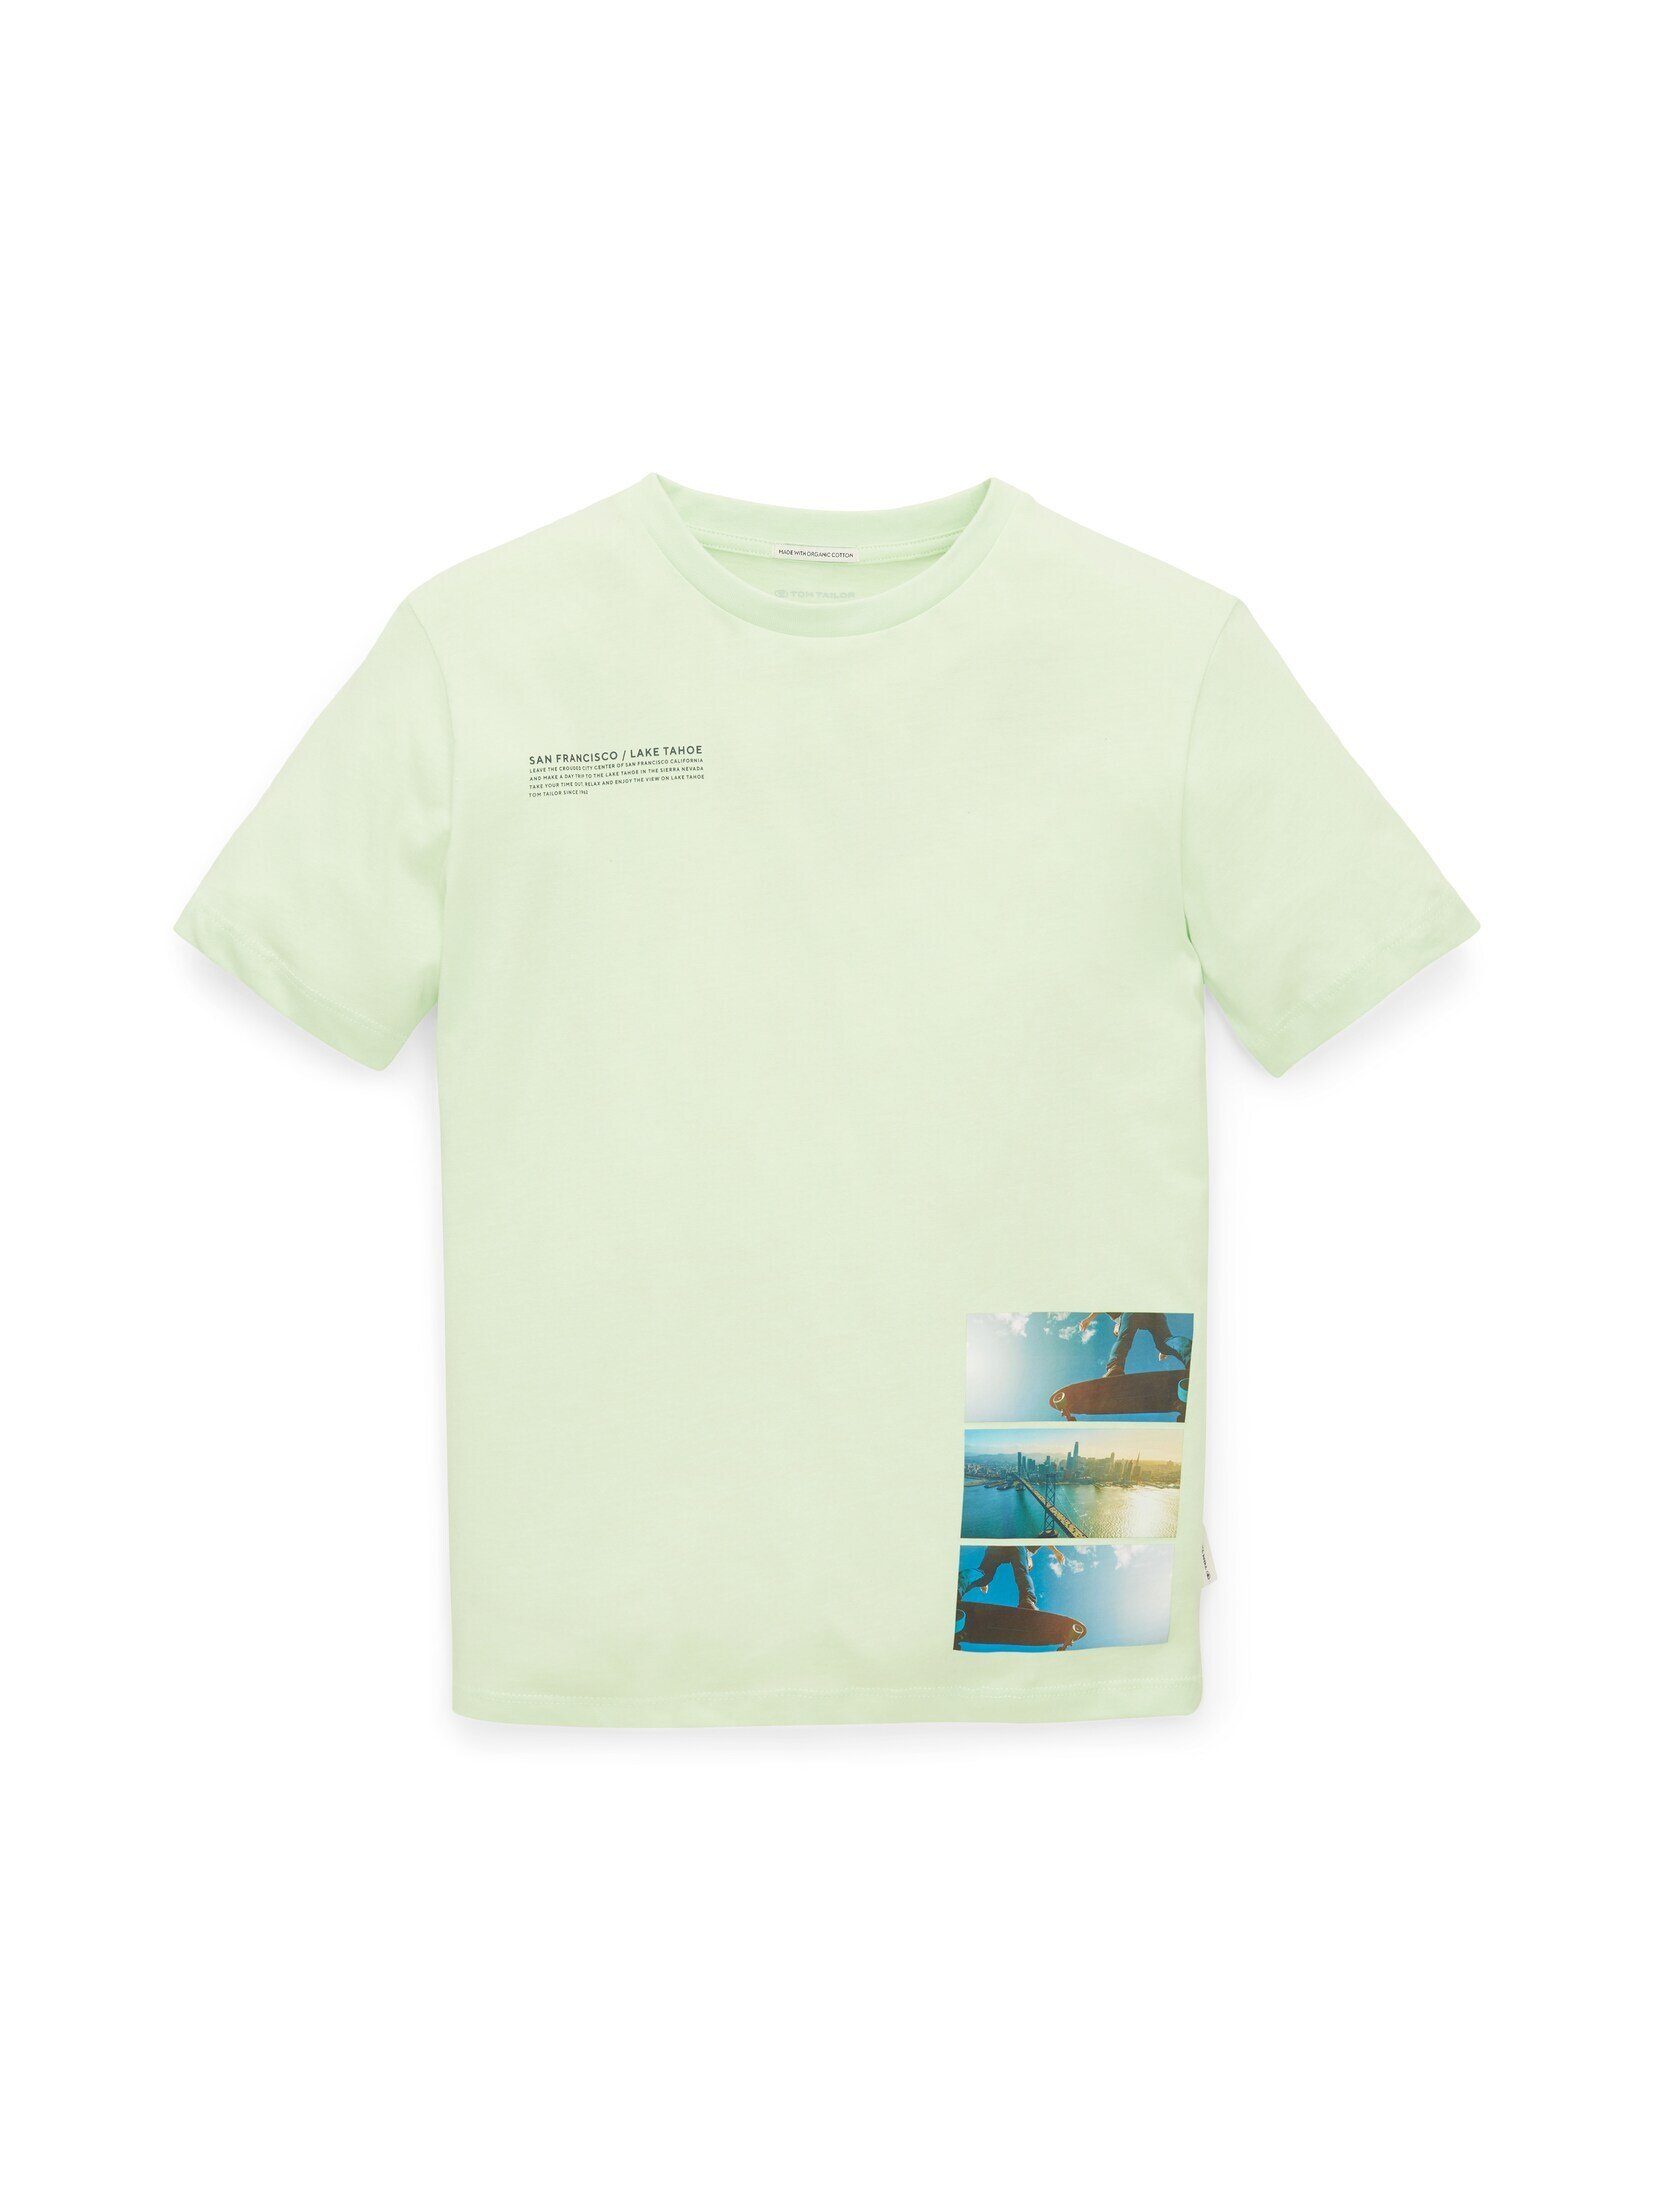 TOM TAILOR T-Shirt T-Shirt green apple Fotoprint mit fresh lime